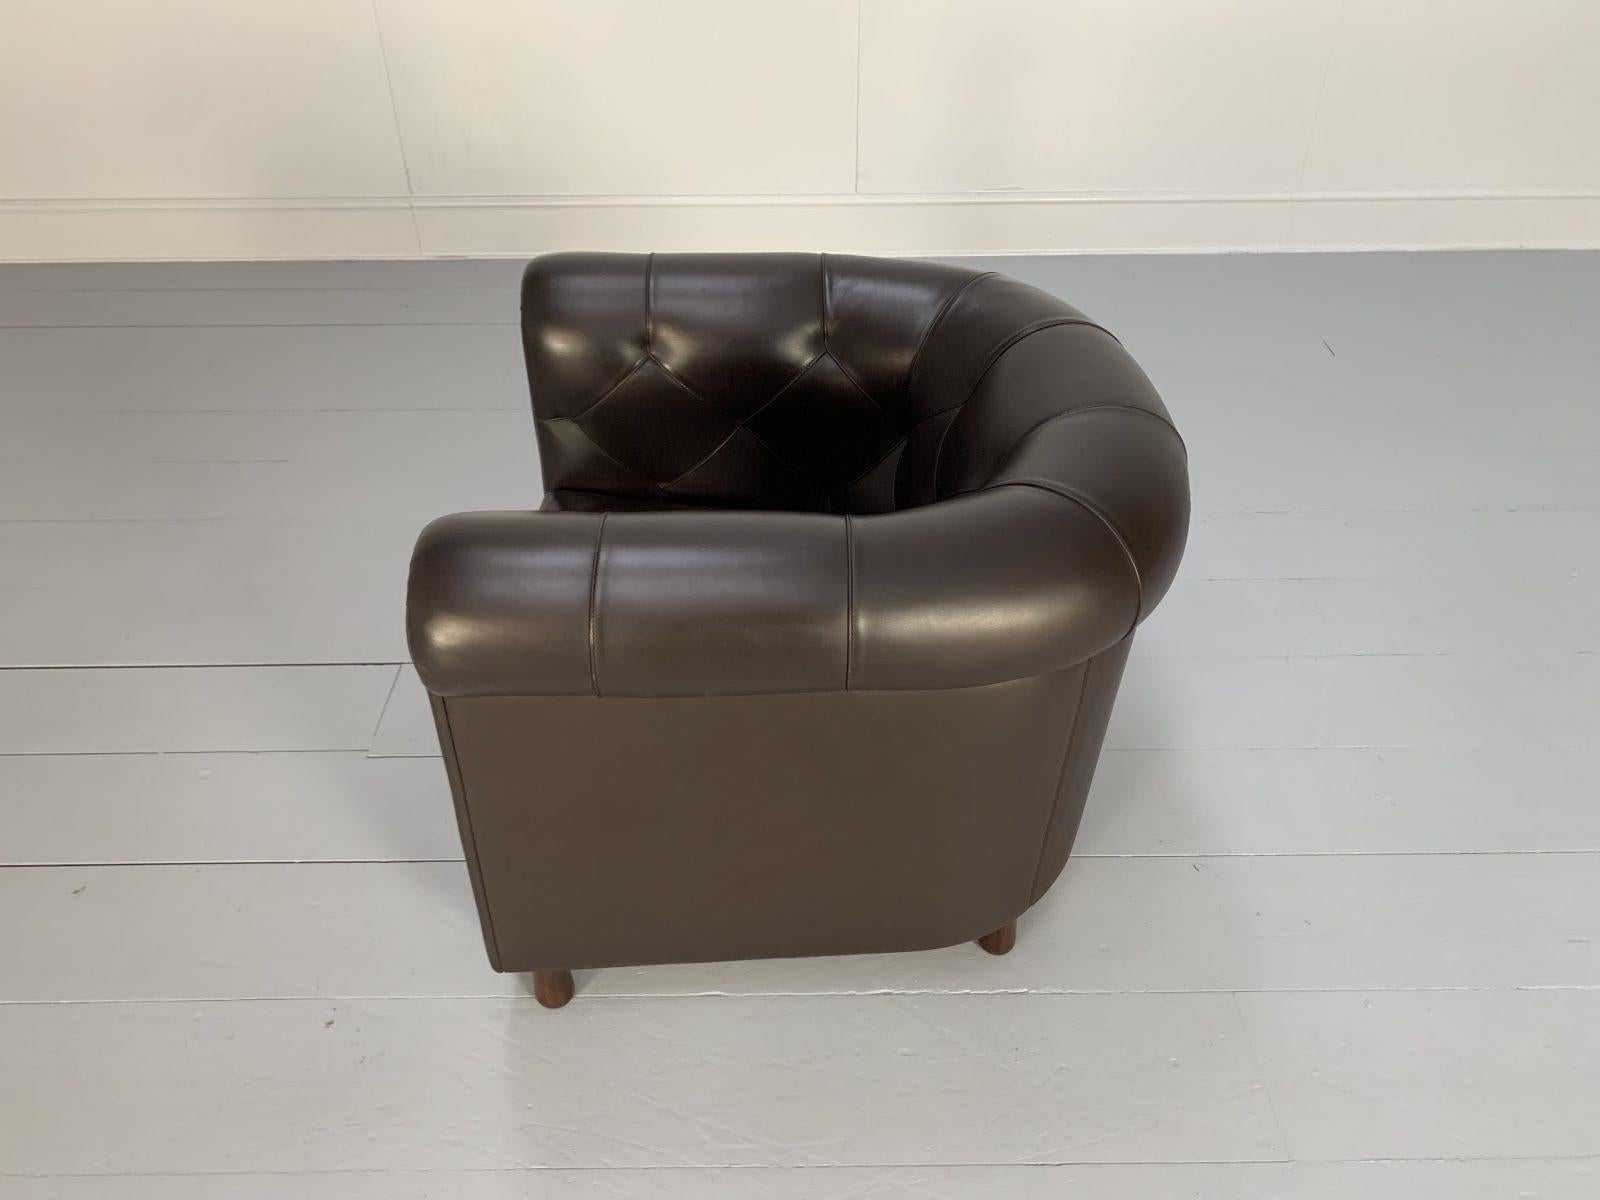 2 Poltrona Frau “Arcadia” Armchairs, in “Pelle Frau” Dark Brown Leather For Sale 7